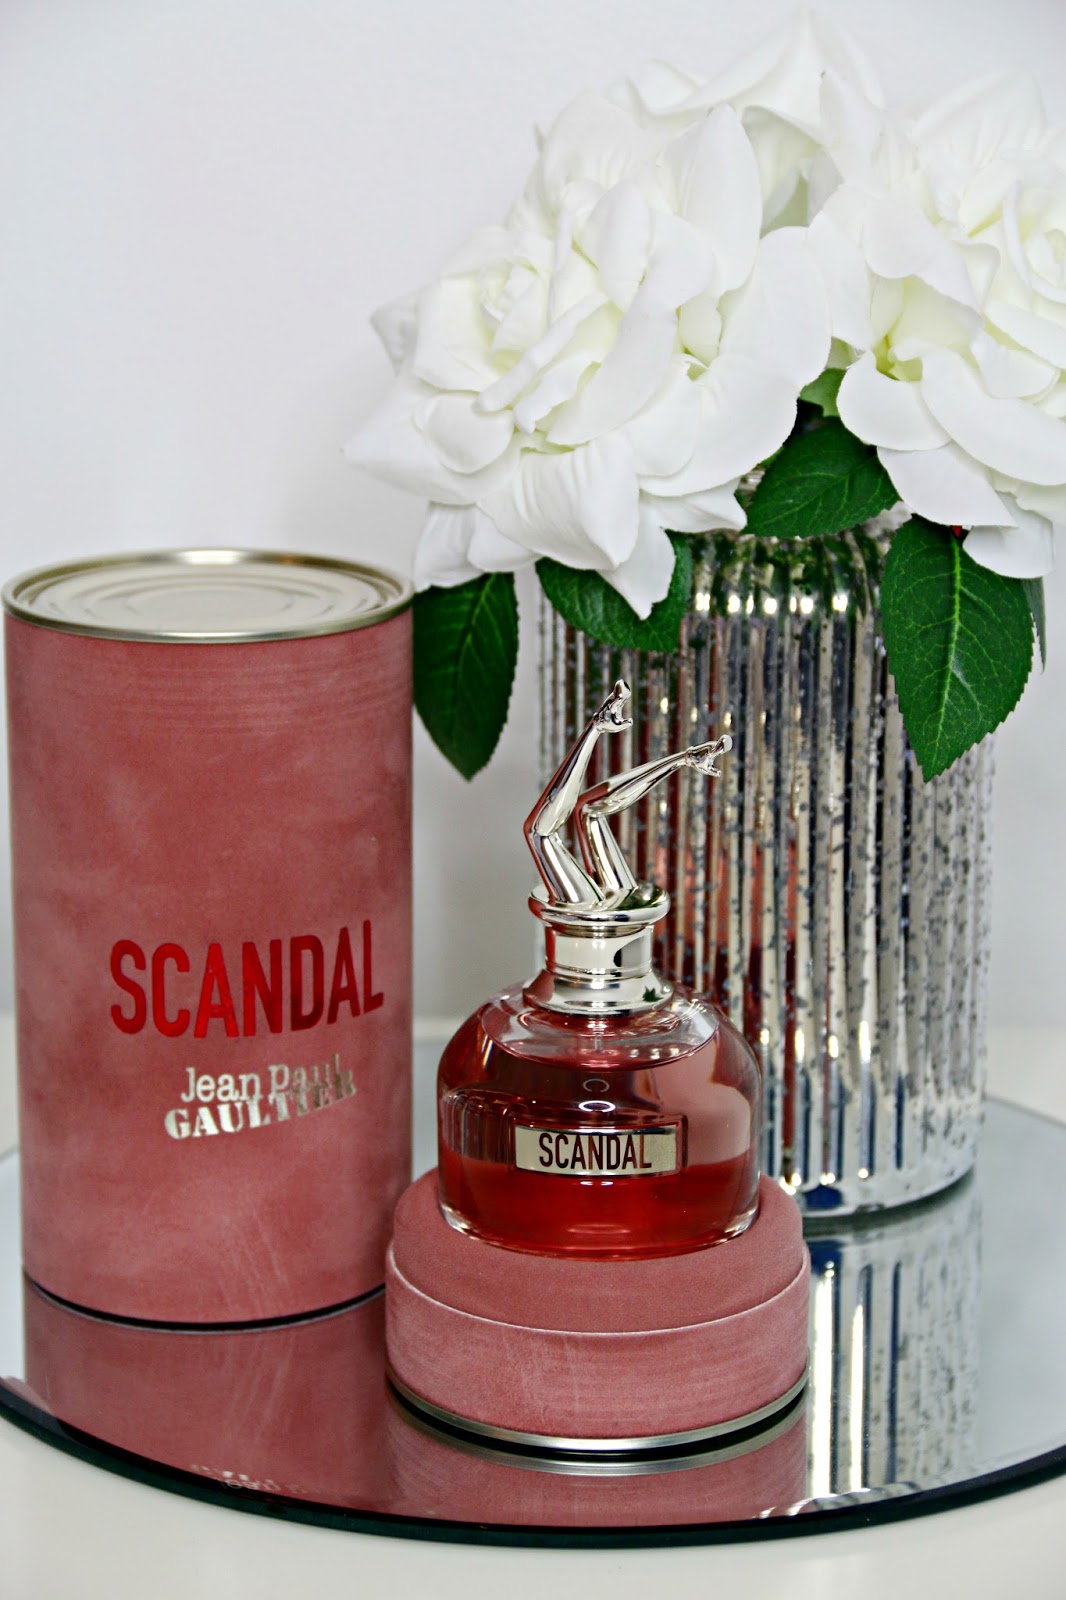 So scandal perfume